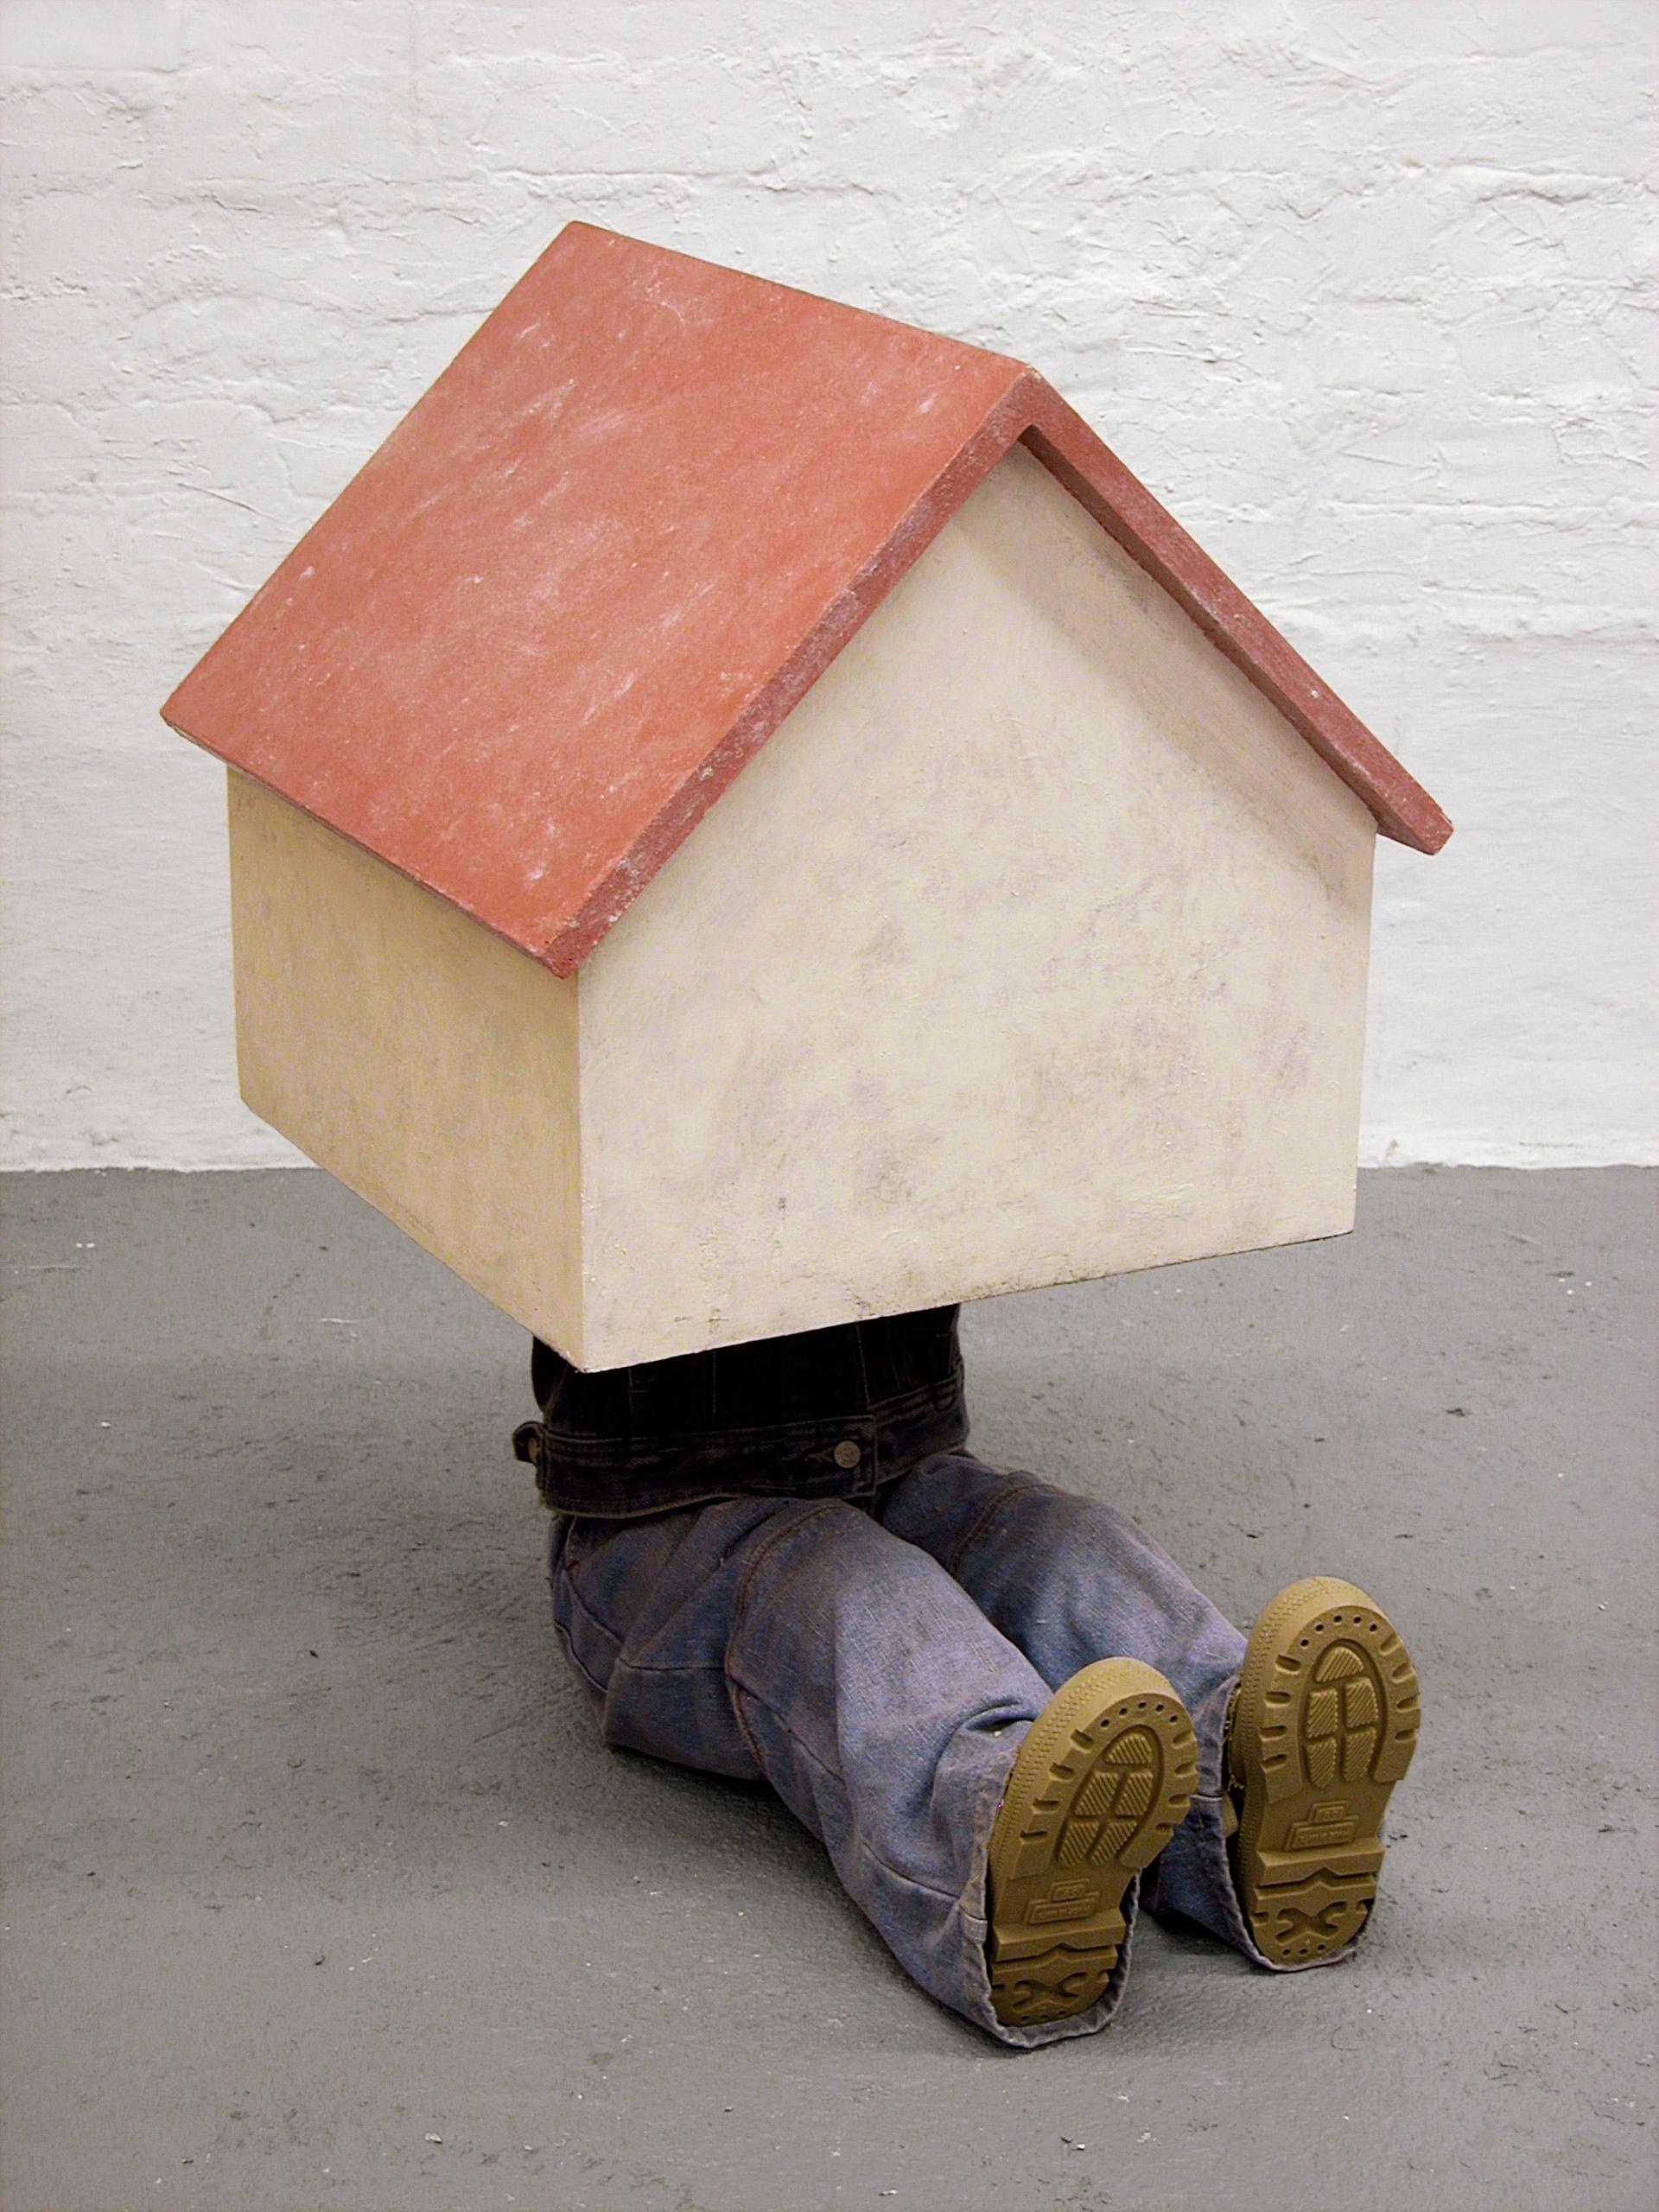 Hans Van Meeuwen Abstract Sculpture - A Doll House, Mixed Media Figurative Sculpture